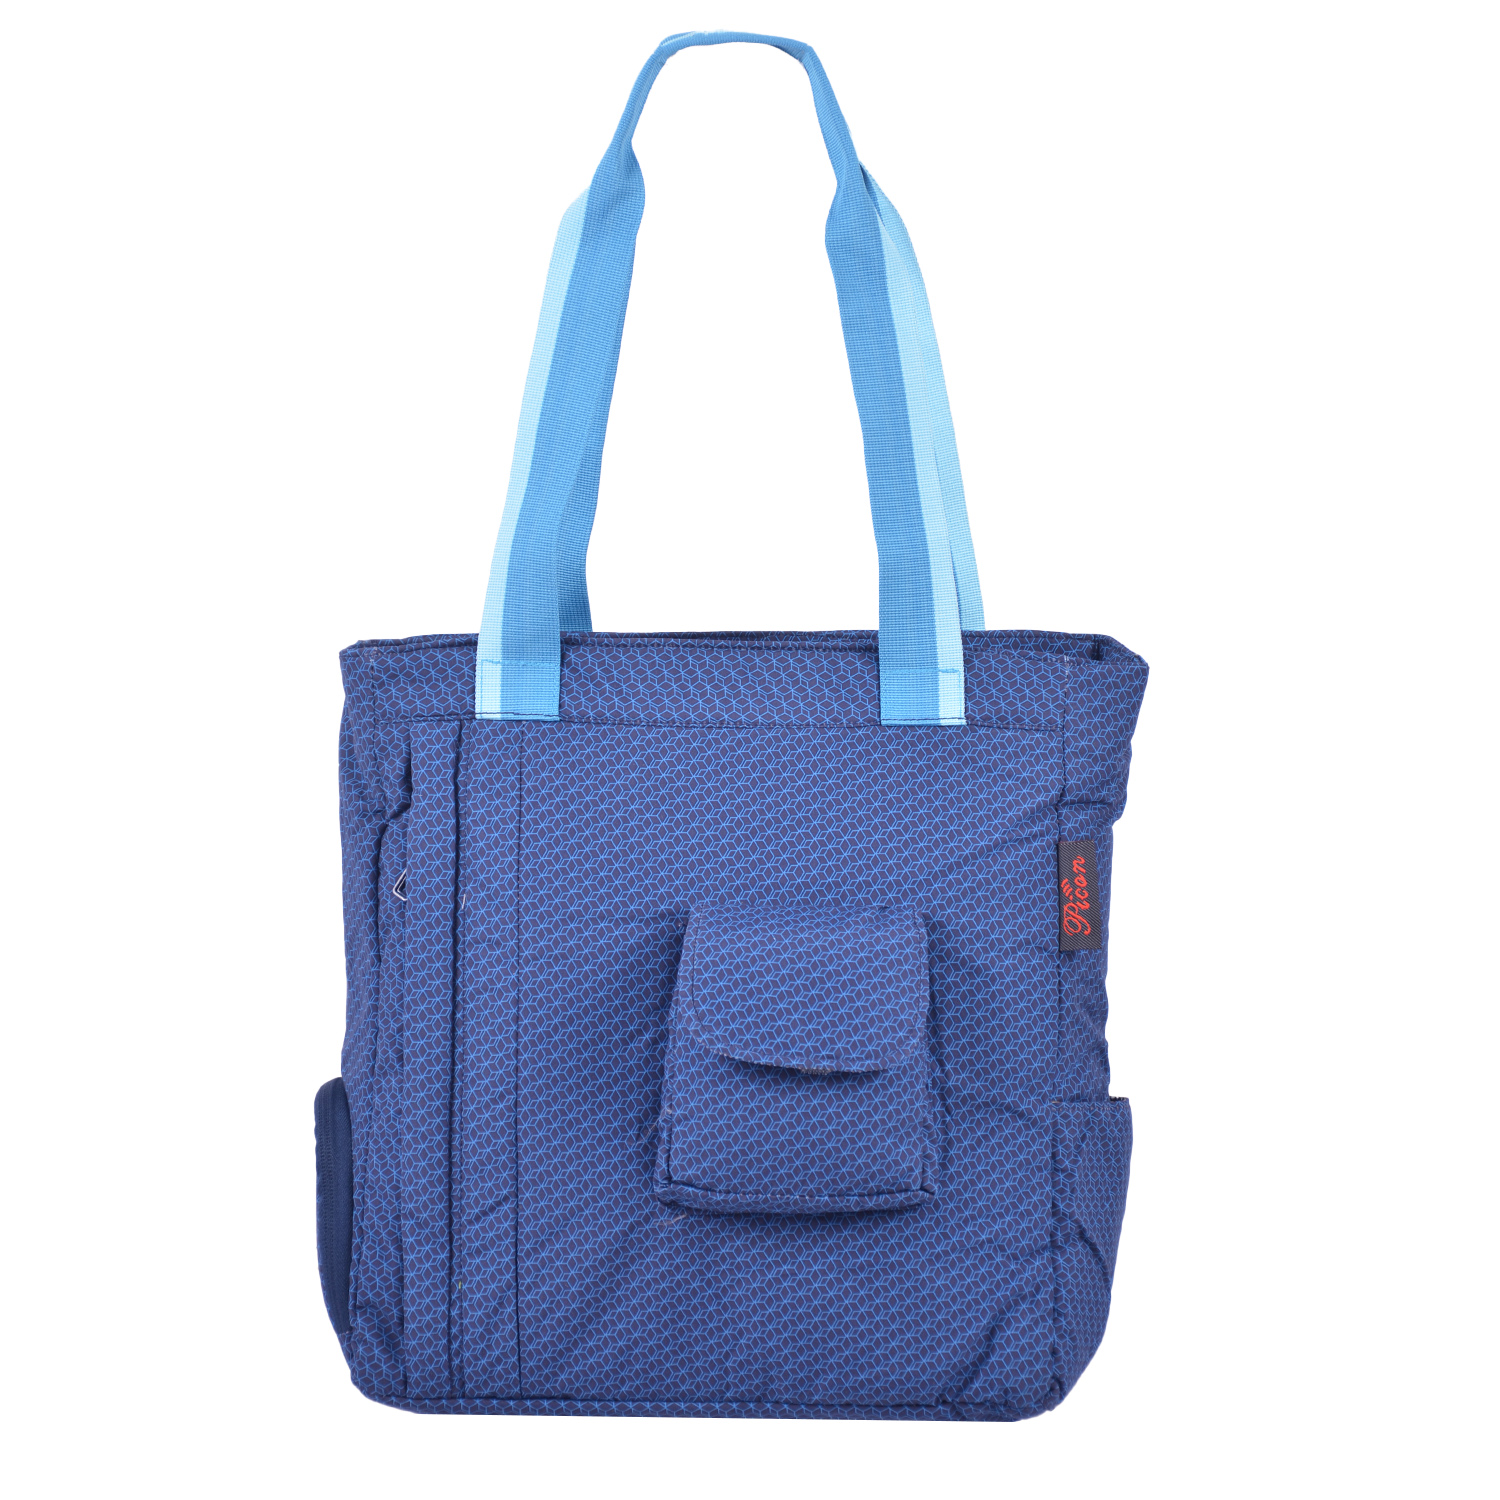 RoshanBags_WOMEN SHOPPING BAG A0326 BLUE